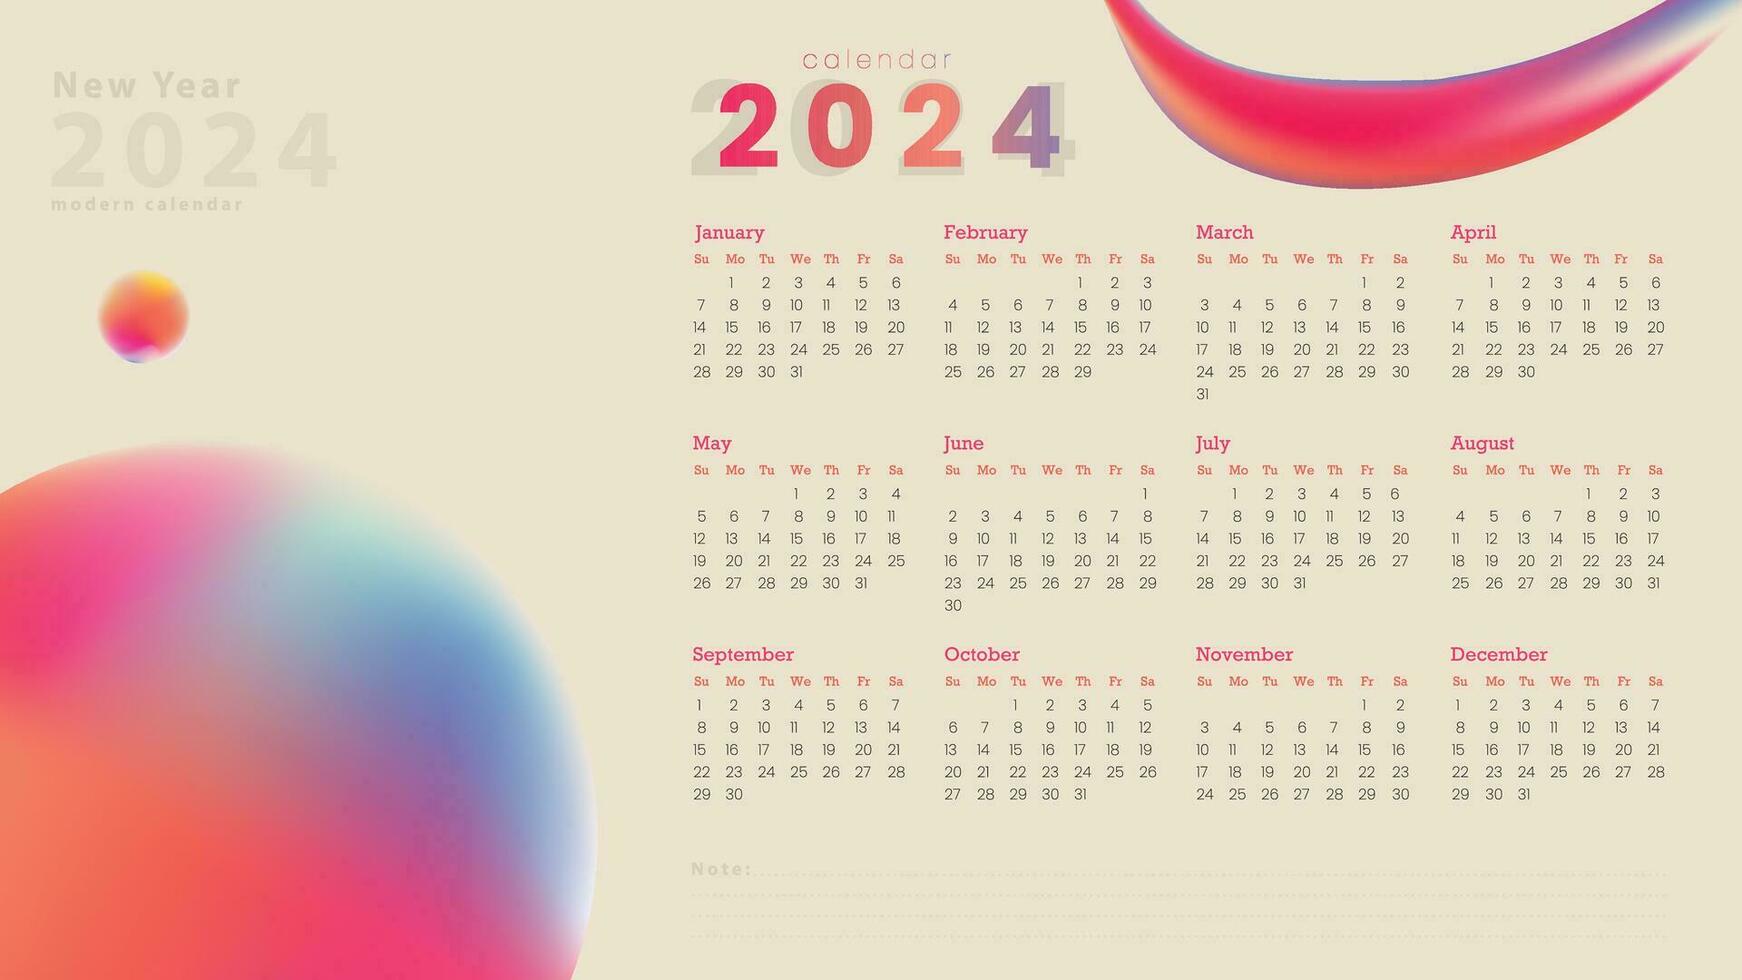 trendy gradient annual calendar template vector